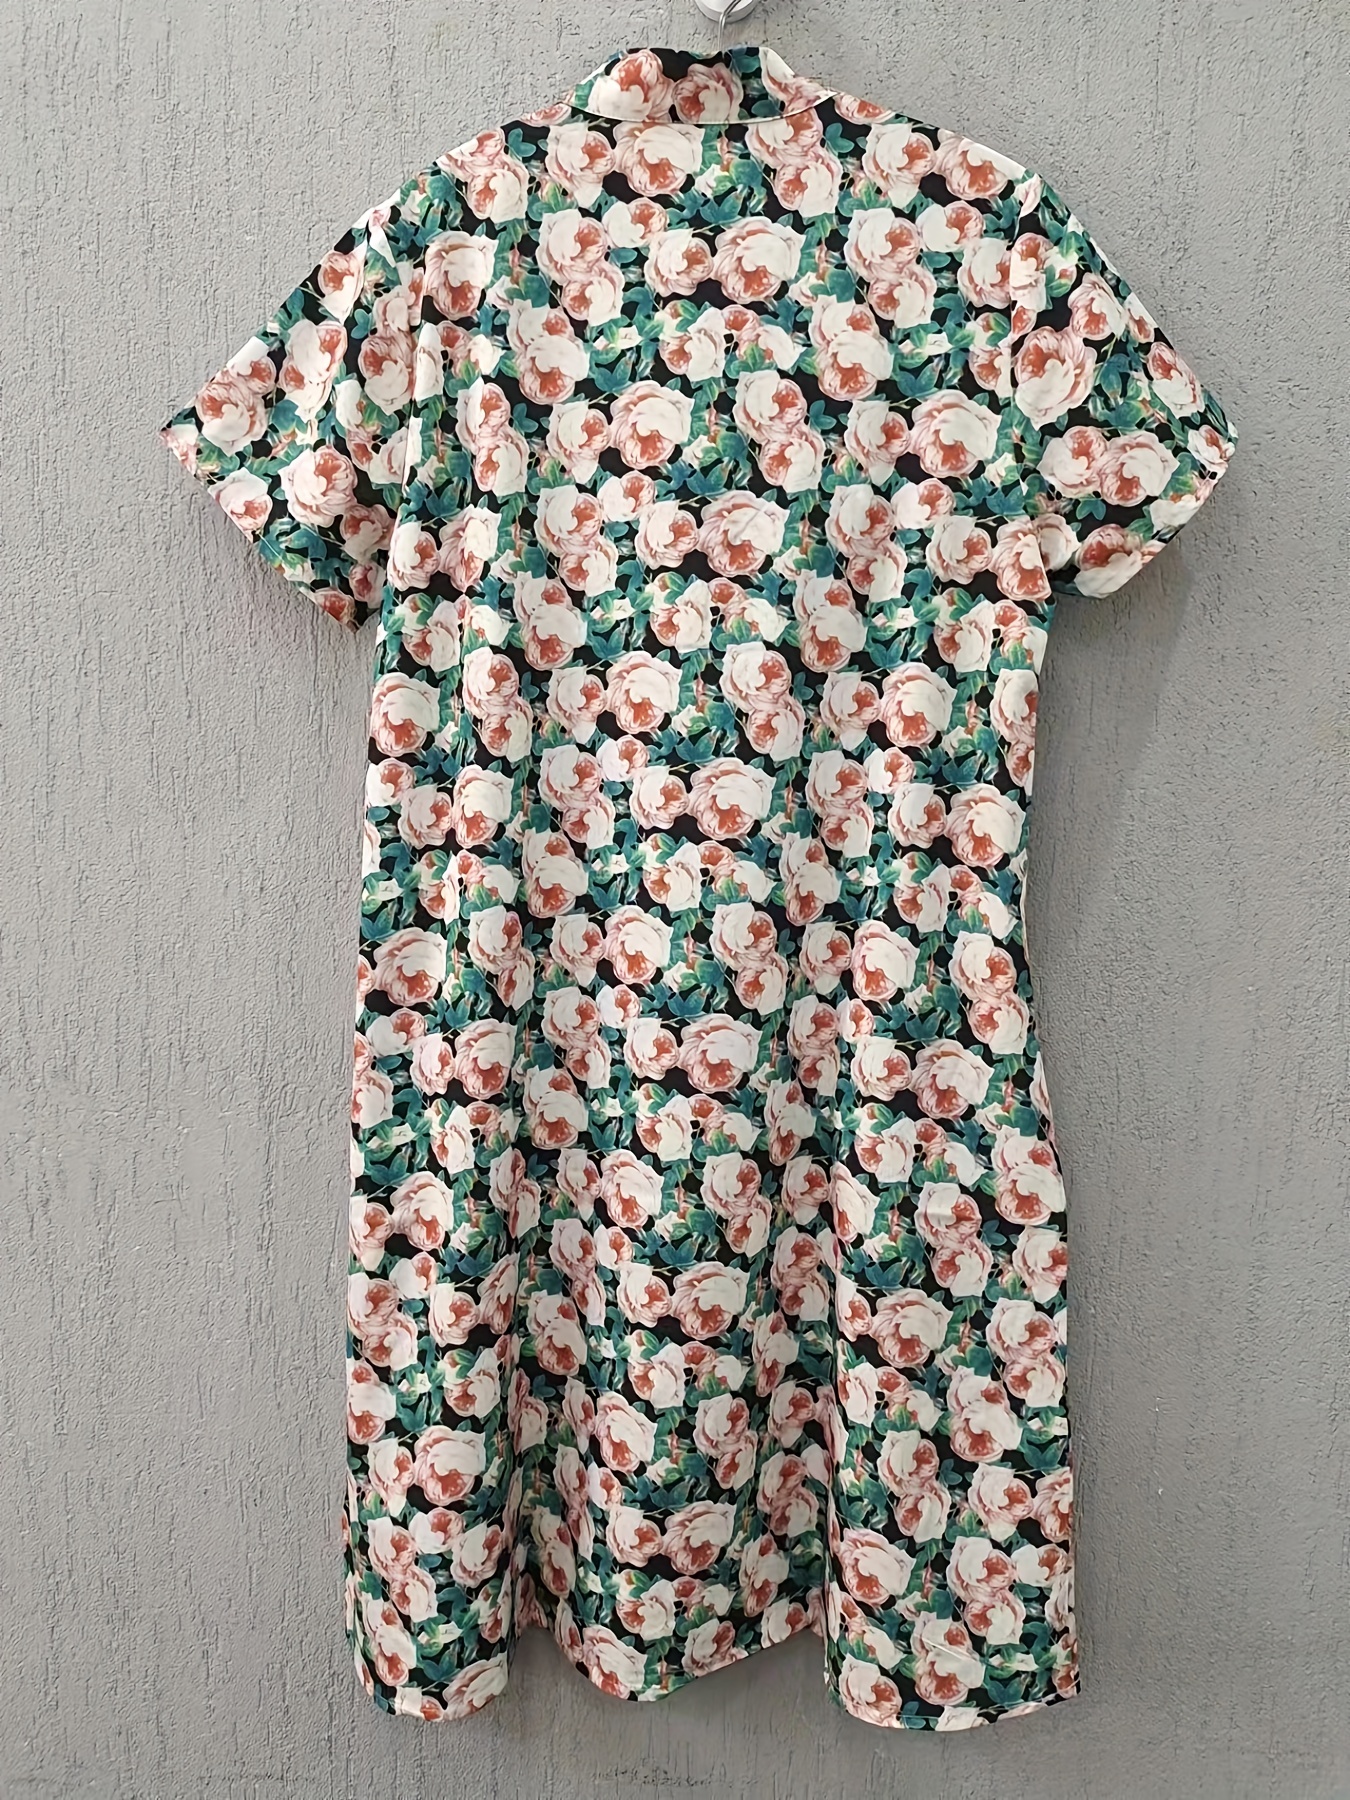 floral print cheongsam dress elegant short sleeve slim midi qipao dress womens clothing